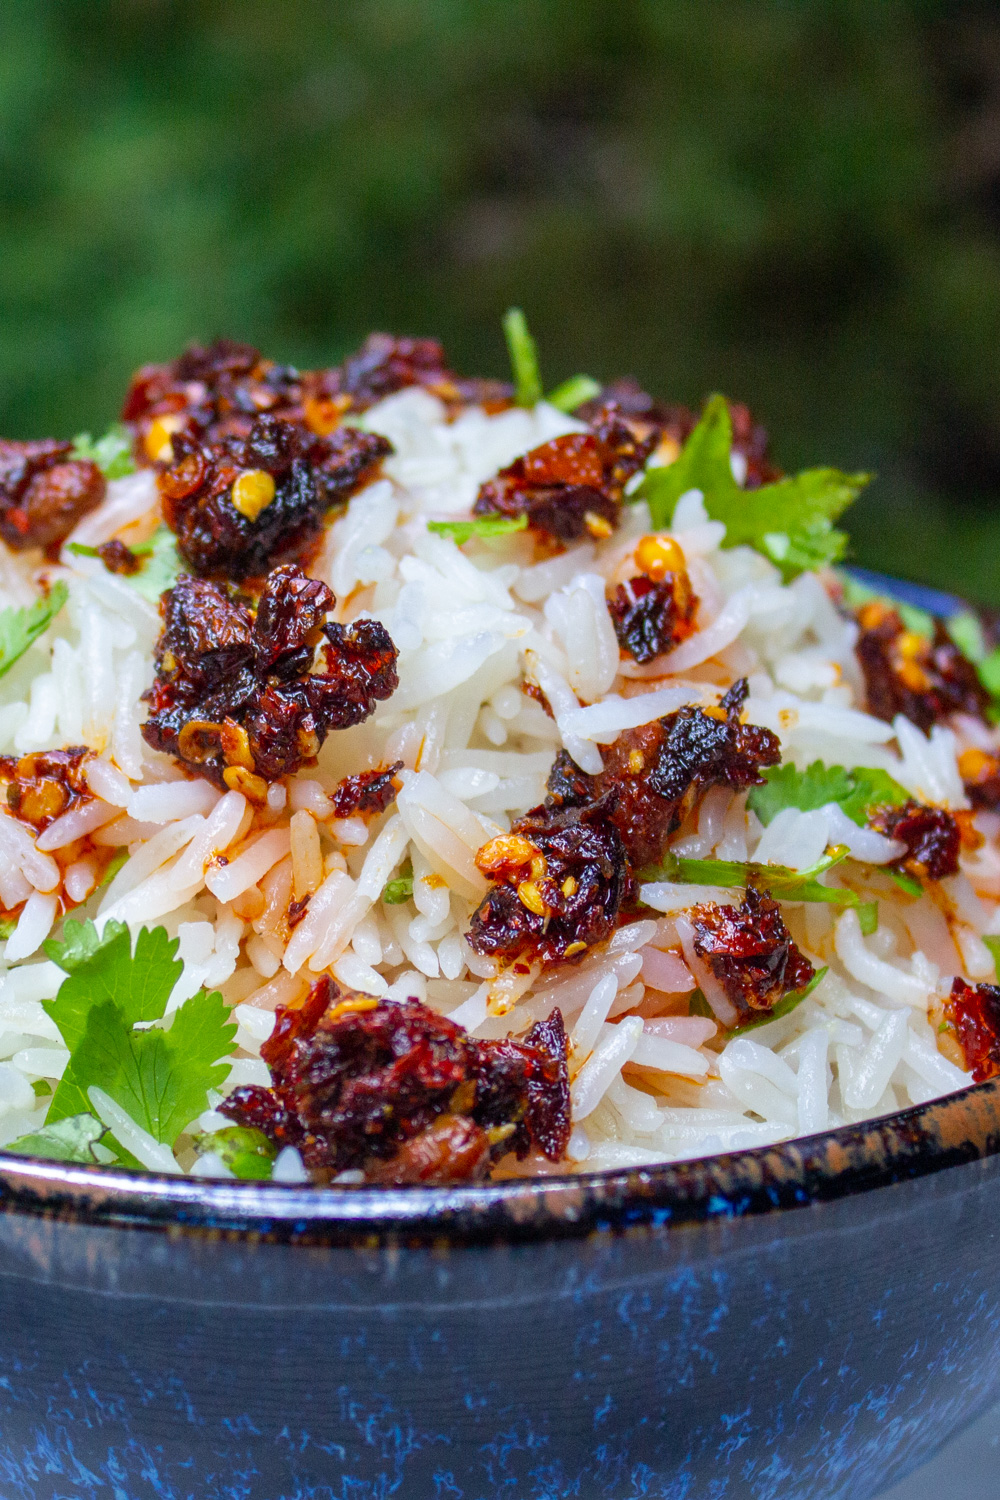 coconut jasmine rice with cilantro and chili crisps in bowl.